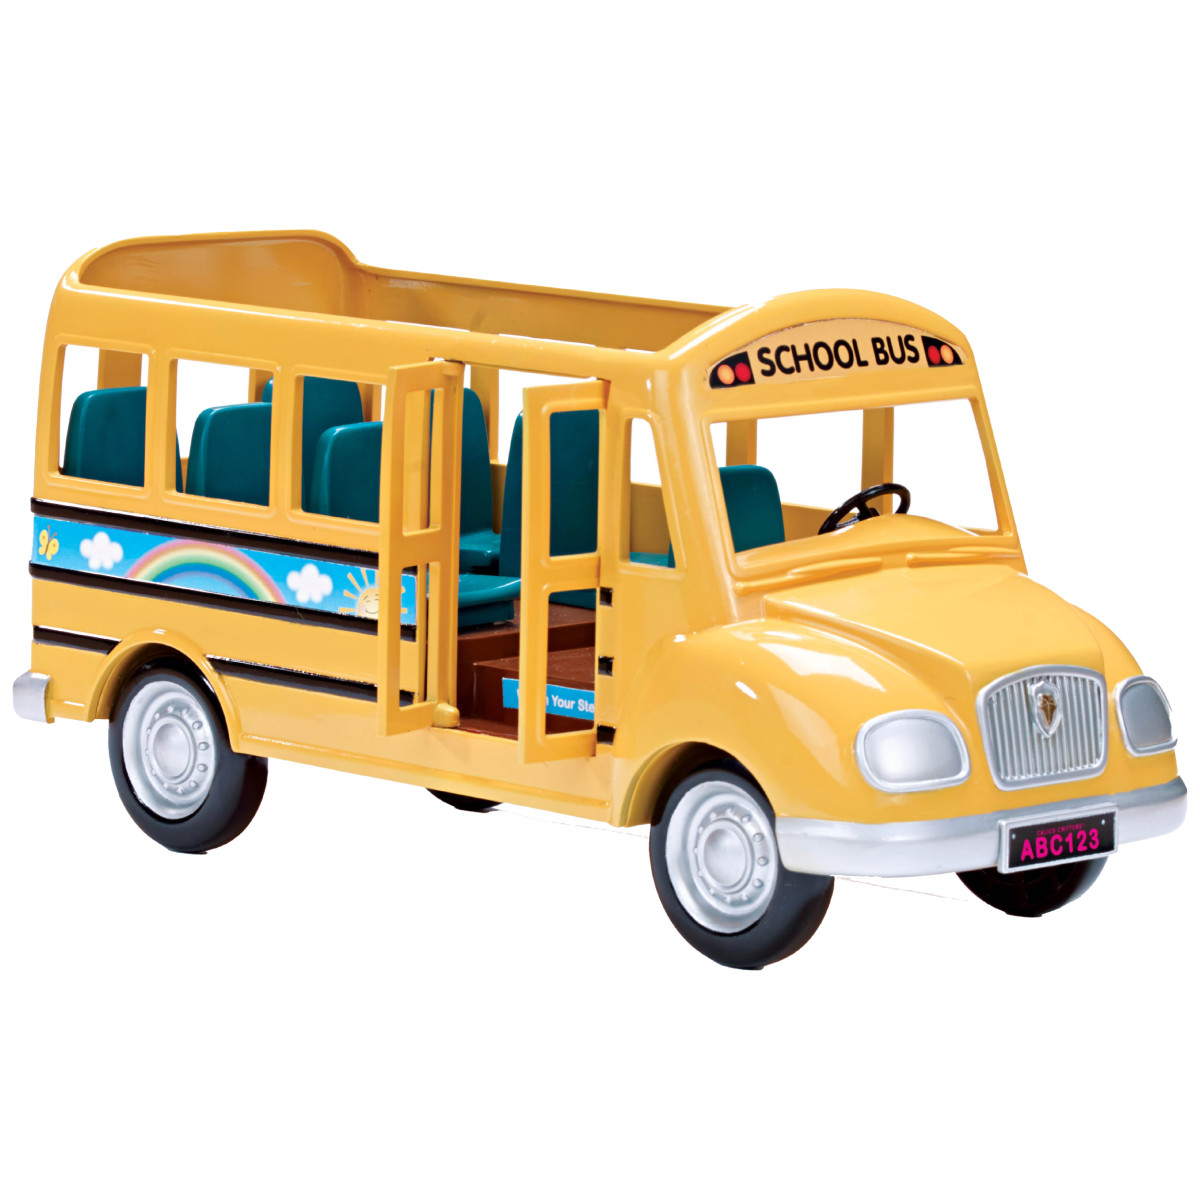 School Bus, , large image 0